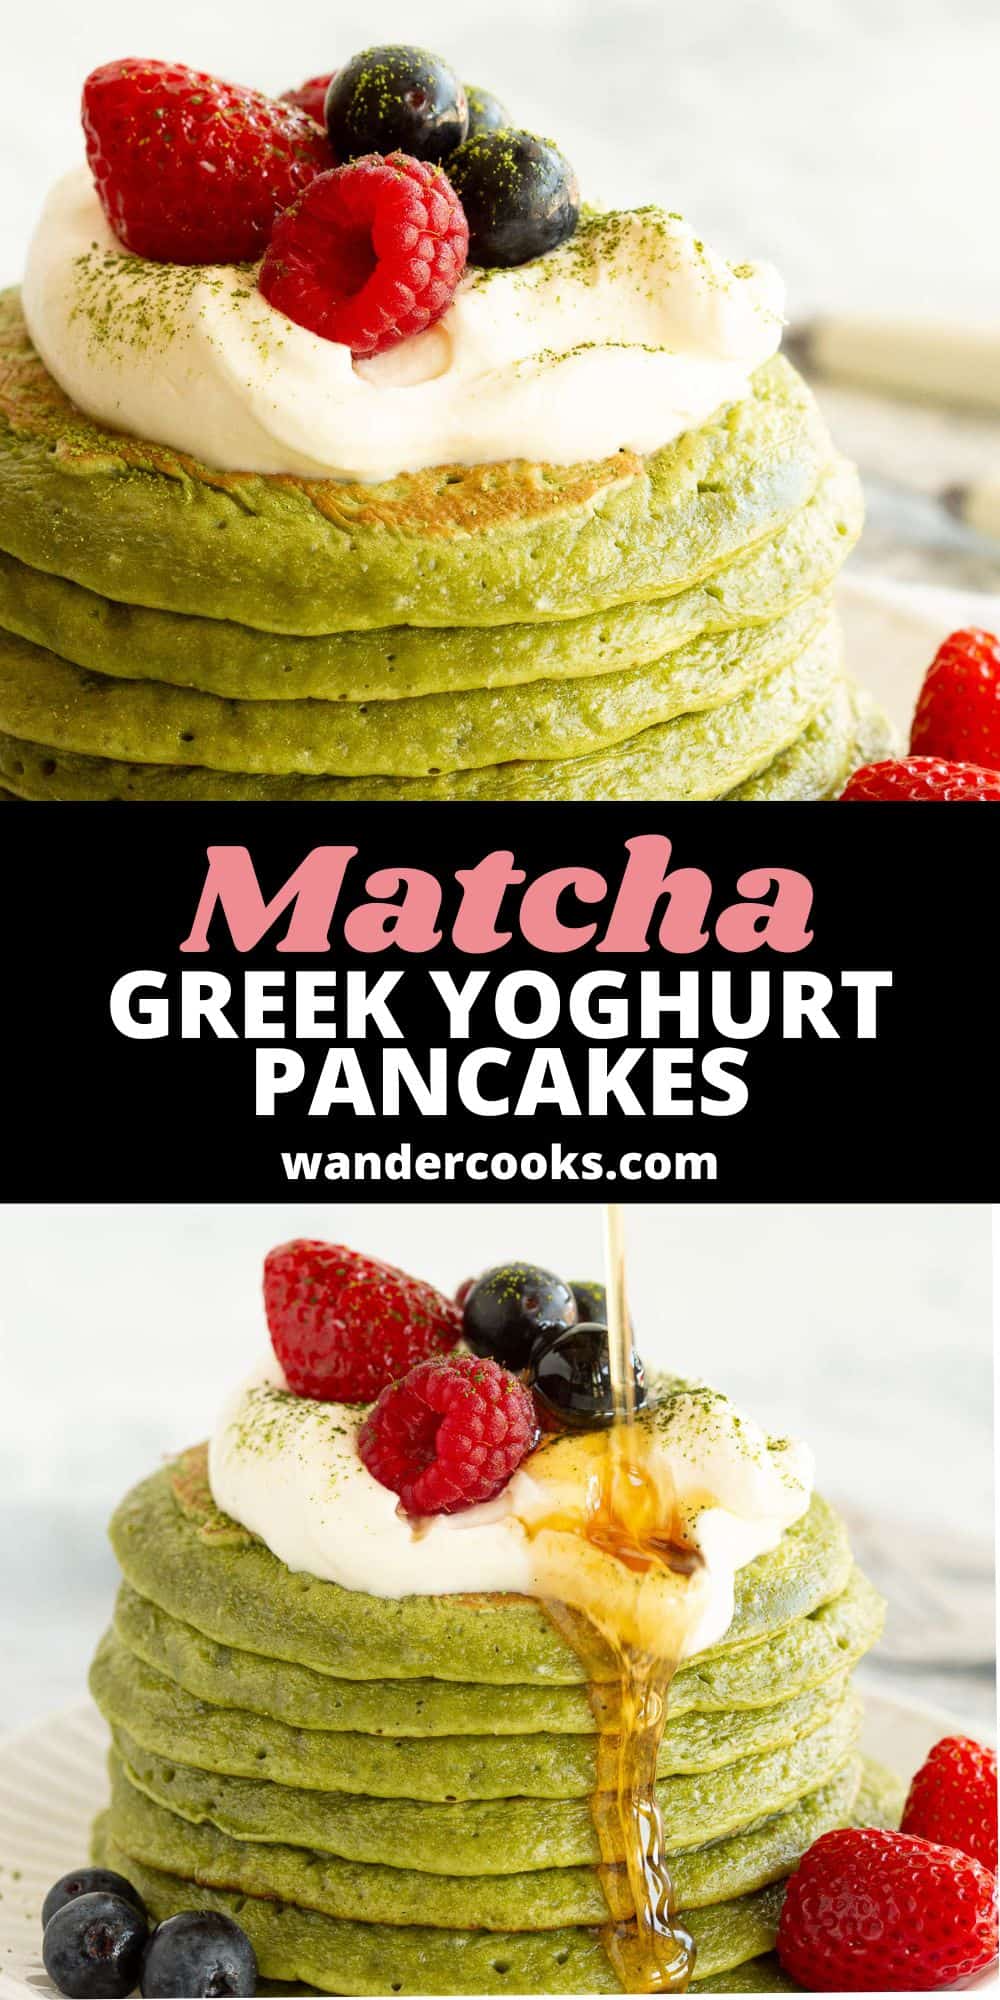 Matcha Greek Yoghurt Pancakes